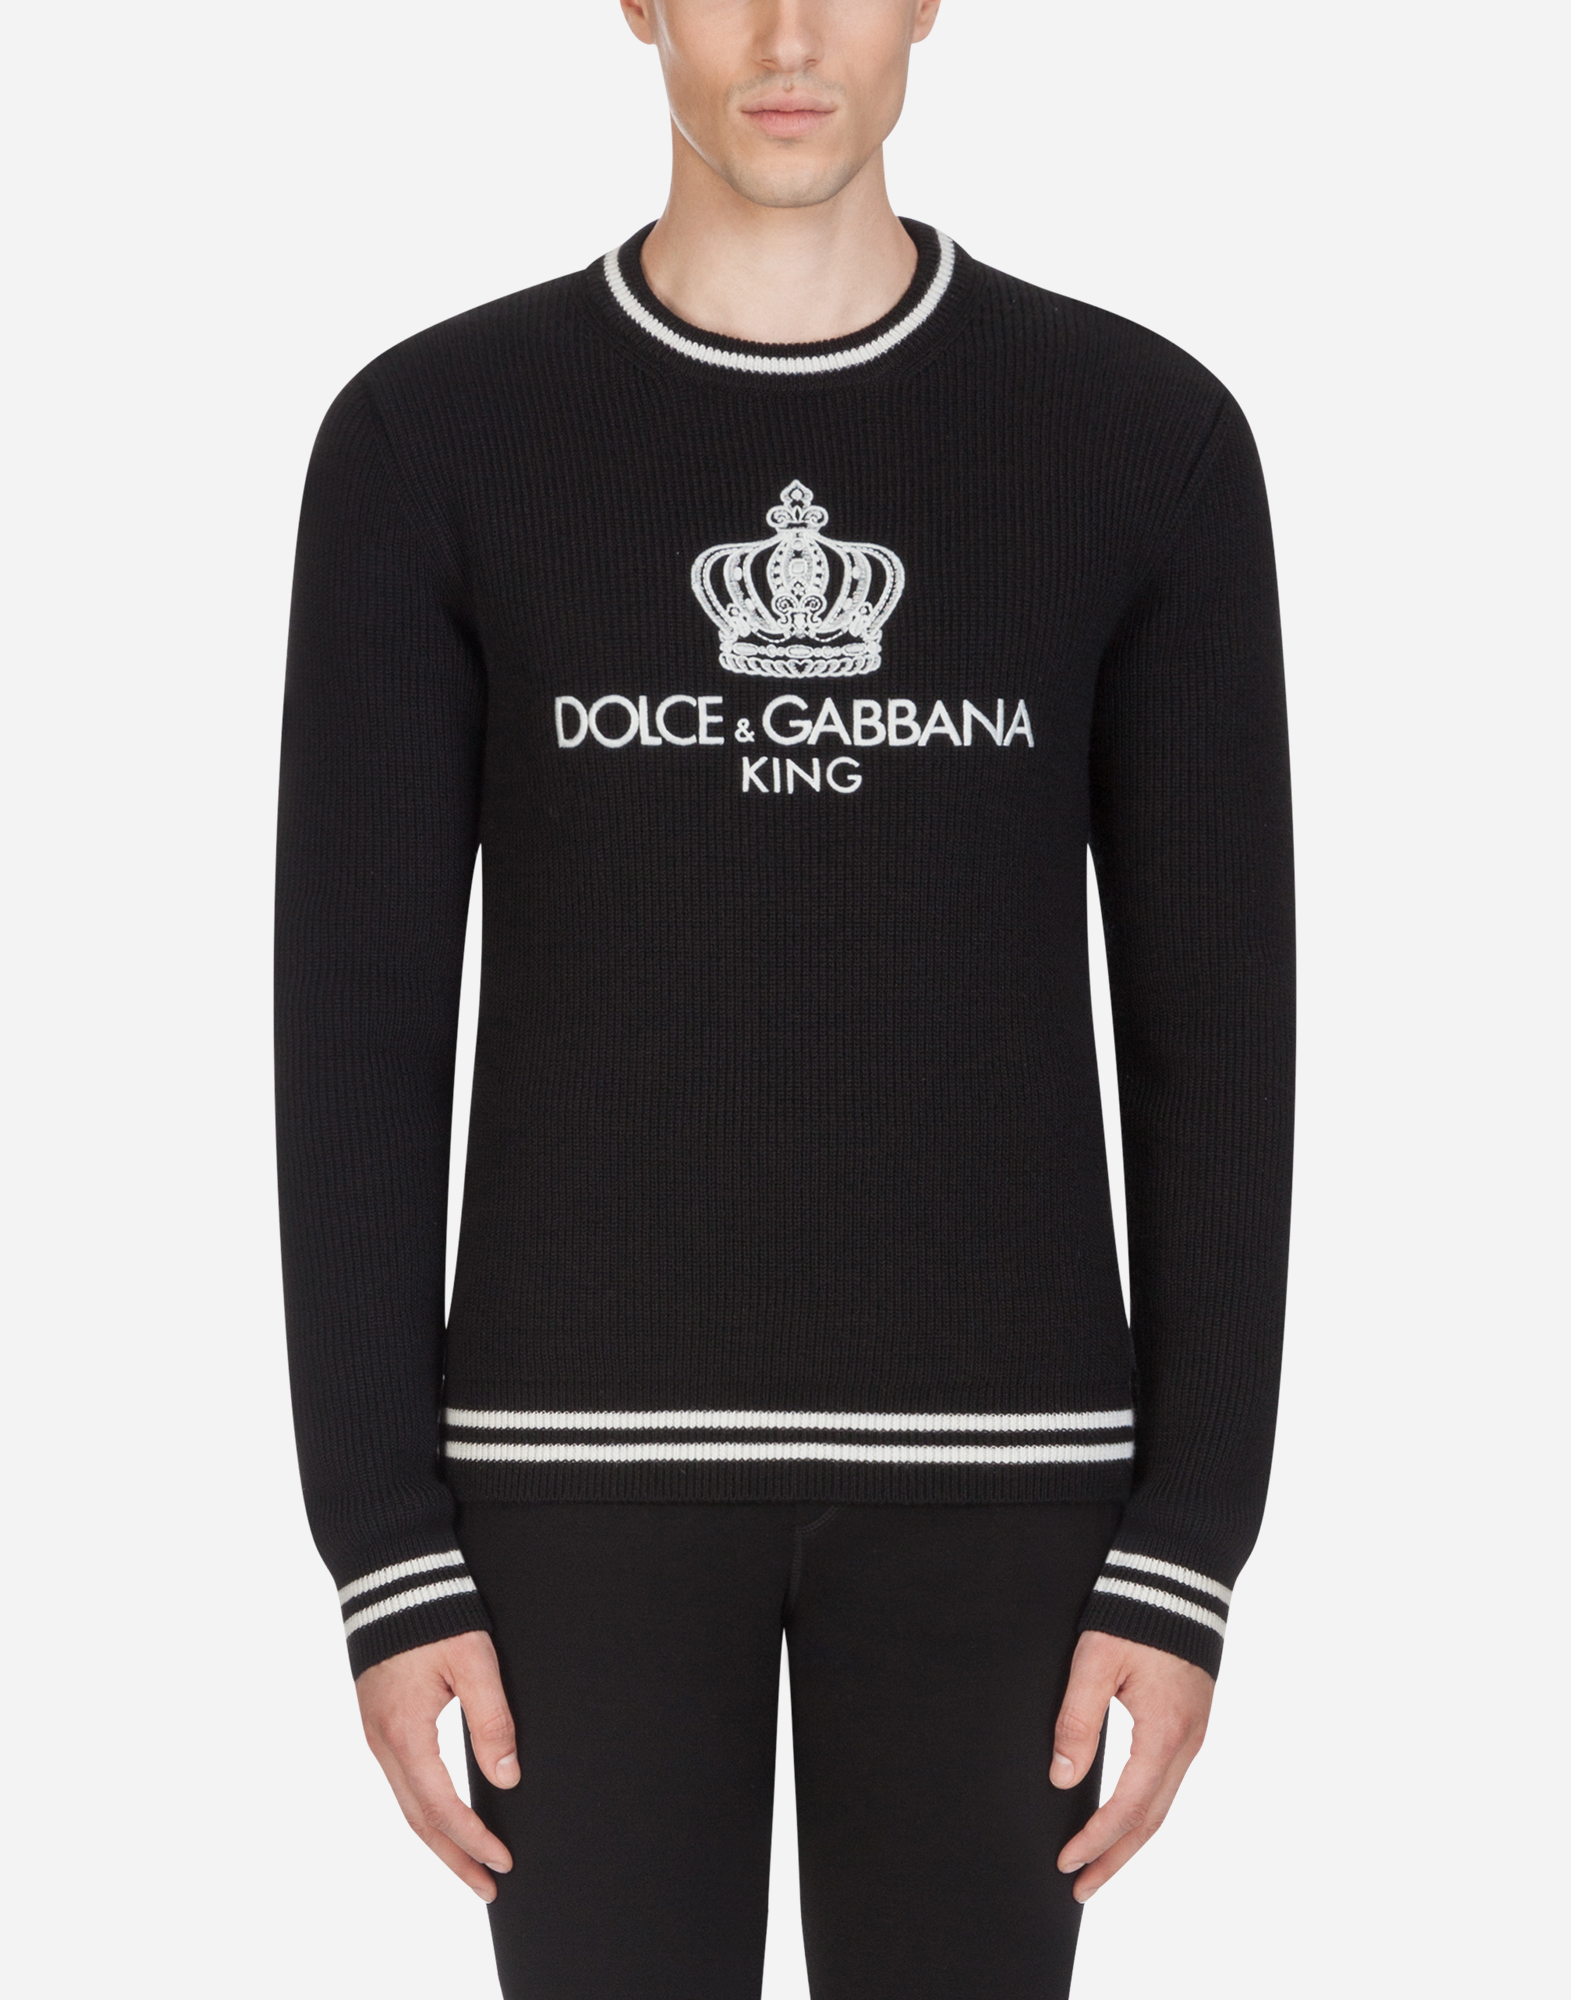 dolce and gabbana crew neck sweater